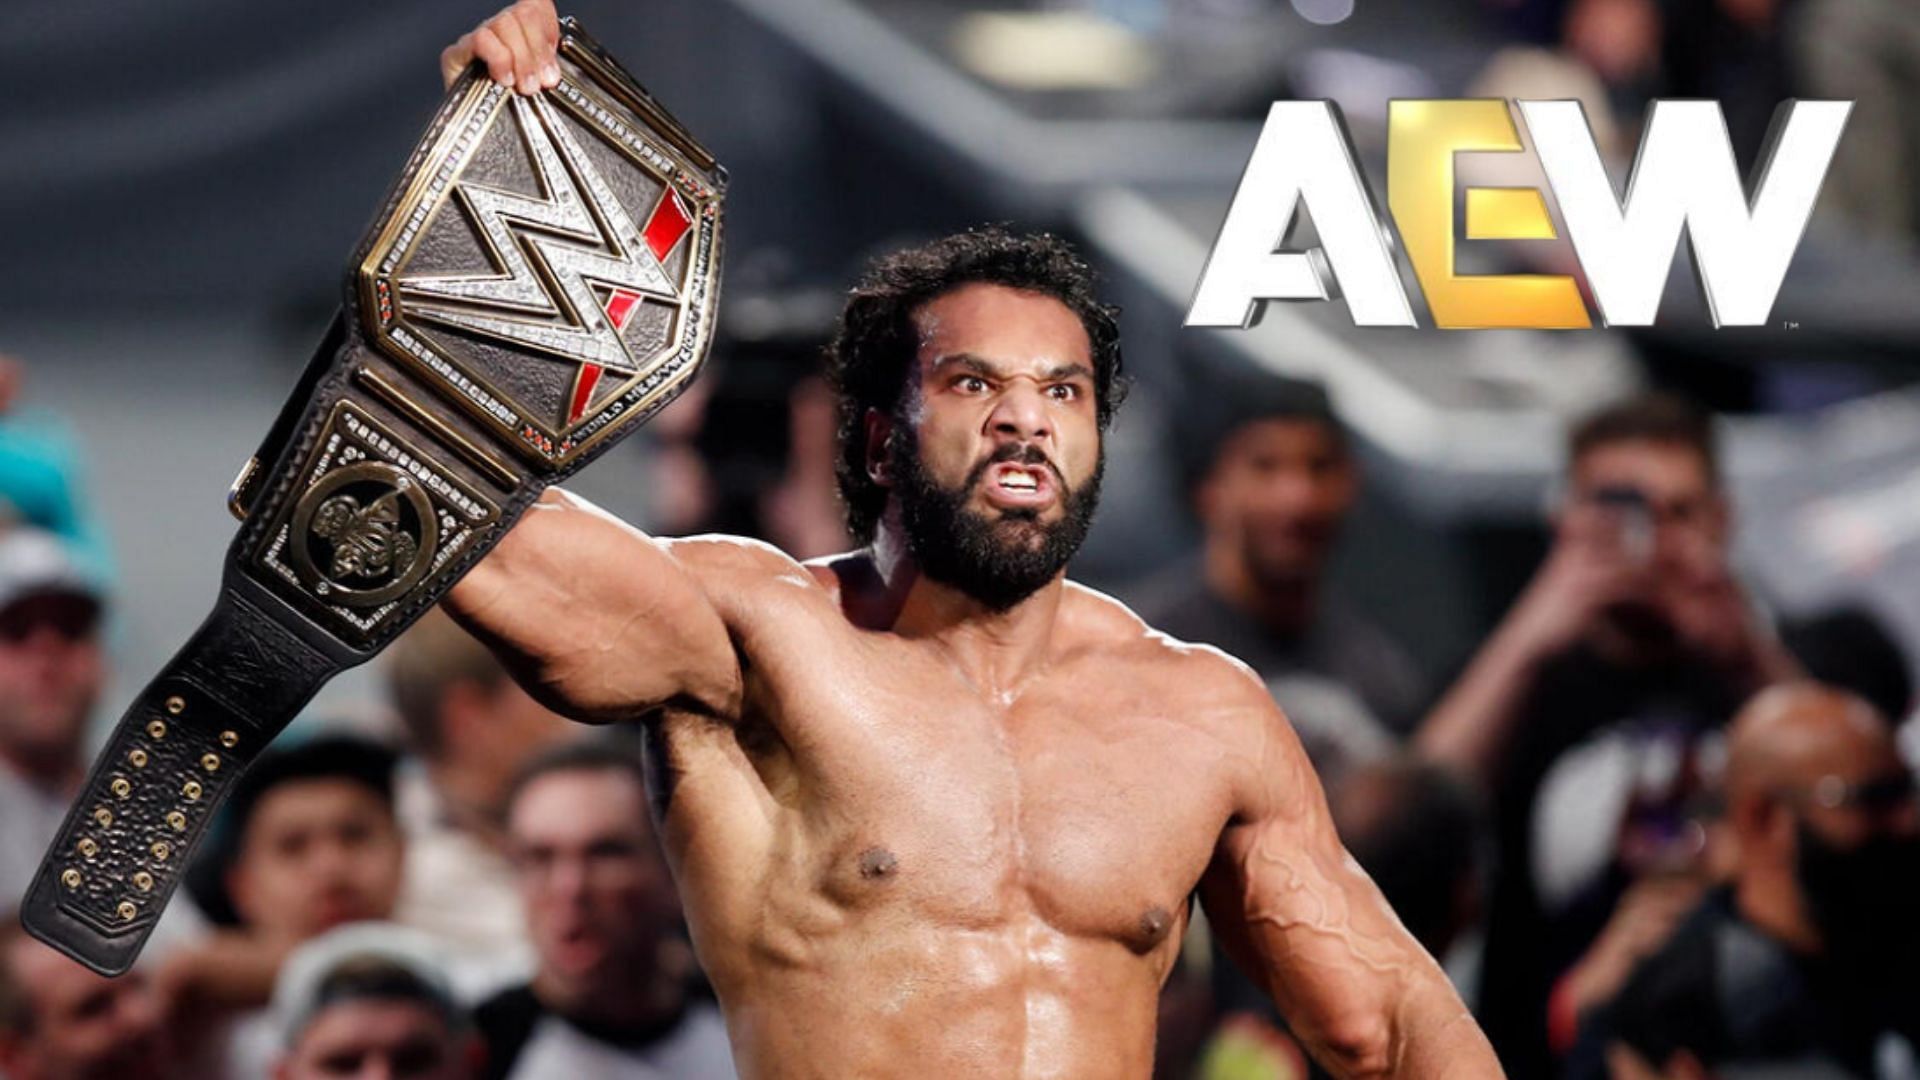 Jinder Mahal is no longer with WWE [Image Credits: WWE